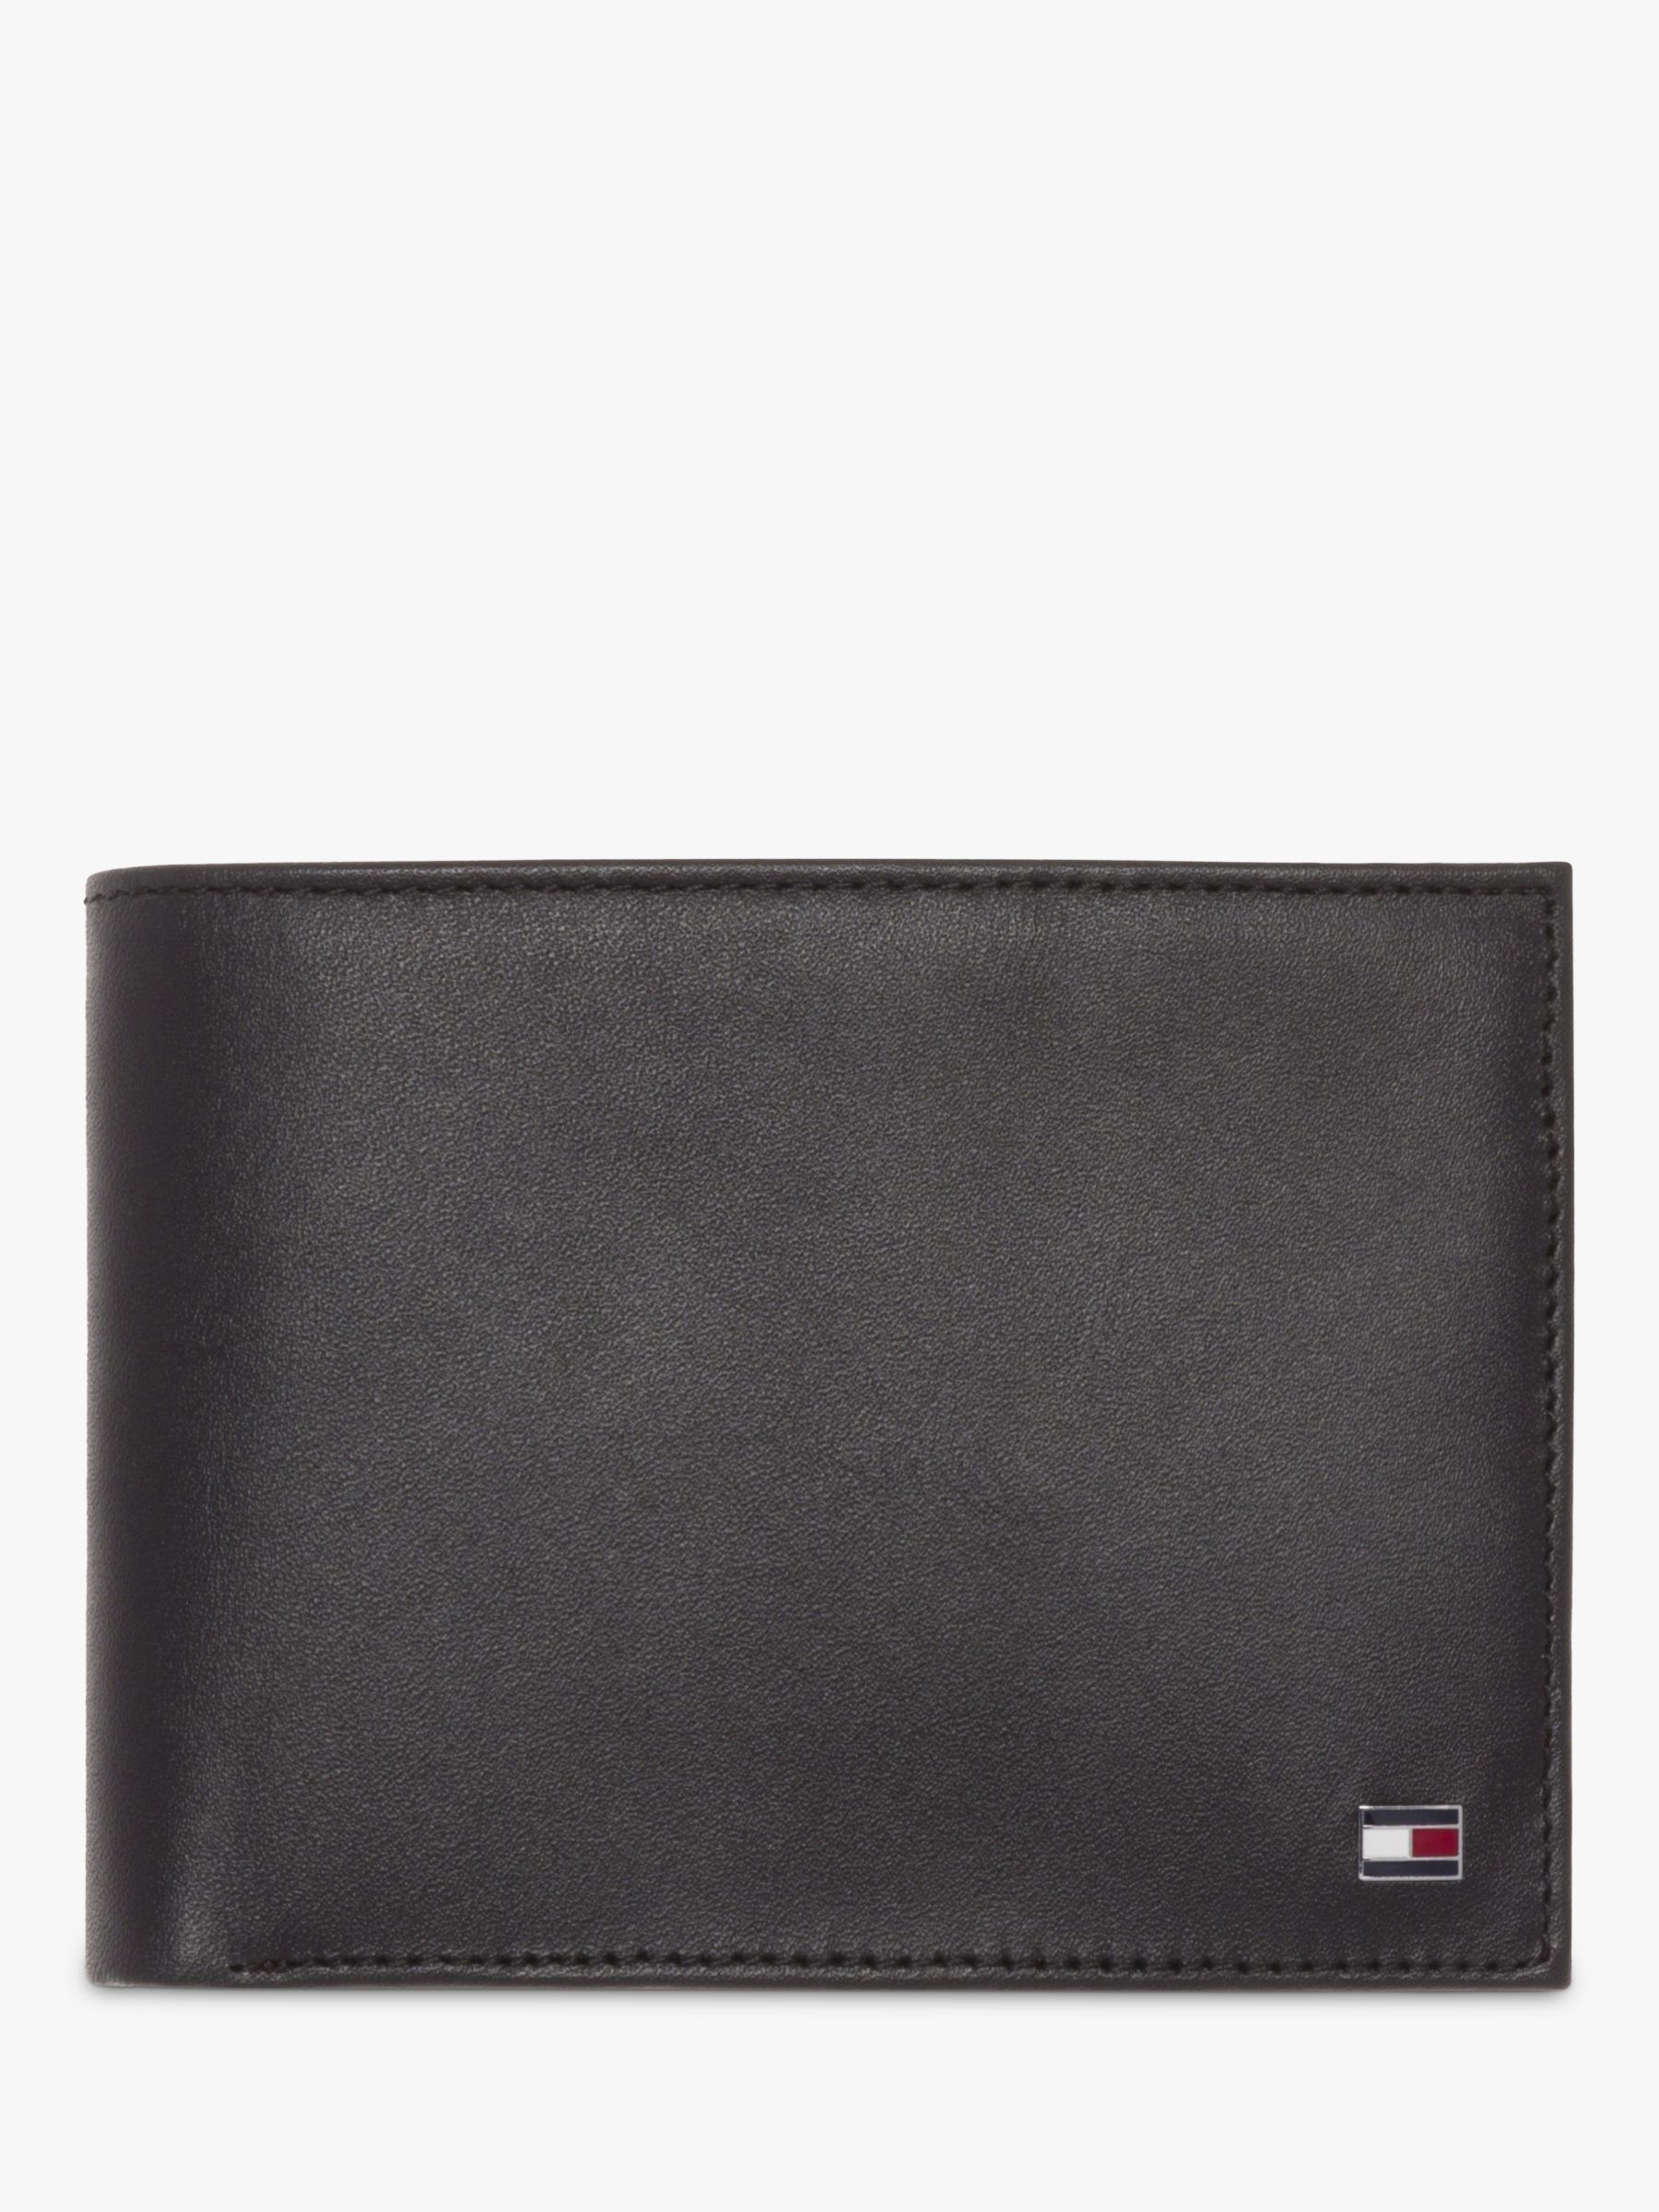 Buy Tommy Hilfiger Eton Leather Coin Wallet Online at johnlewis.com